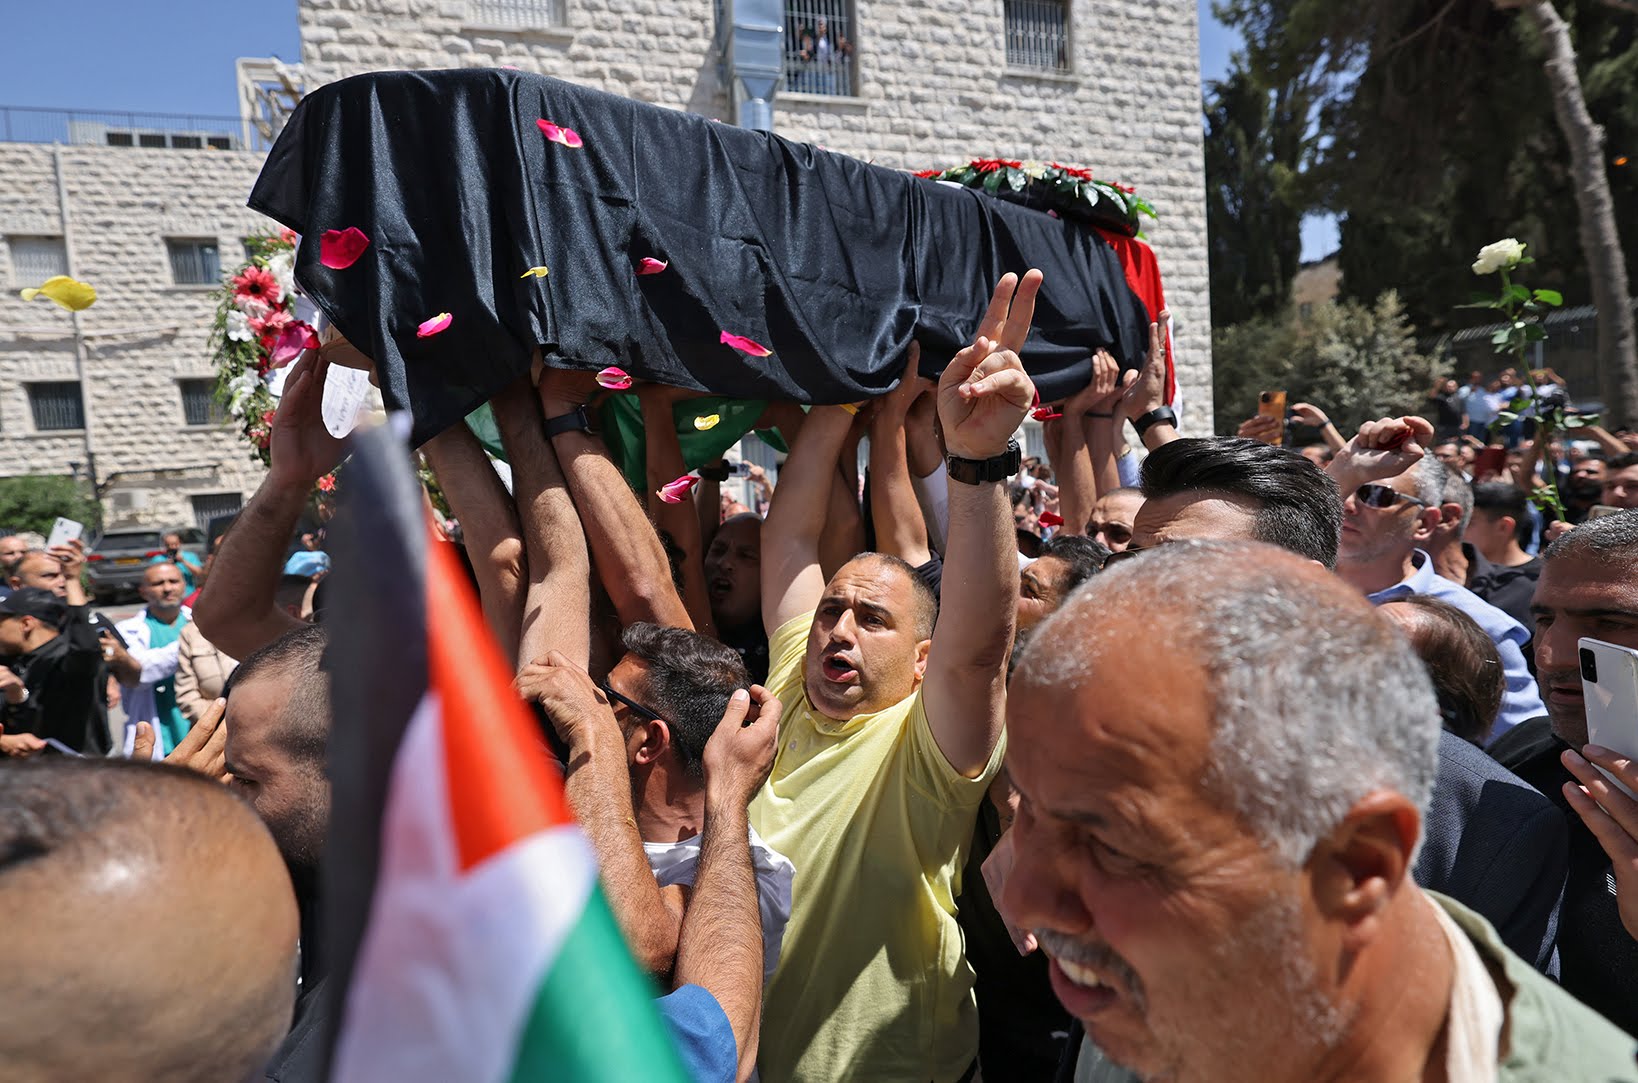 Warga saat mengangkat peti jenazah Shireen Abu Akleh (51), Wartawan Perang dari Al-Jazeera yang ditembak mati tentara Israel saat meliput serangan tentara Israel di lokasi pengungsian di Jenin, Tepi Barat (West Bank) yang diduduki Israel. (Sumber Foto : Harian Disway)